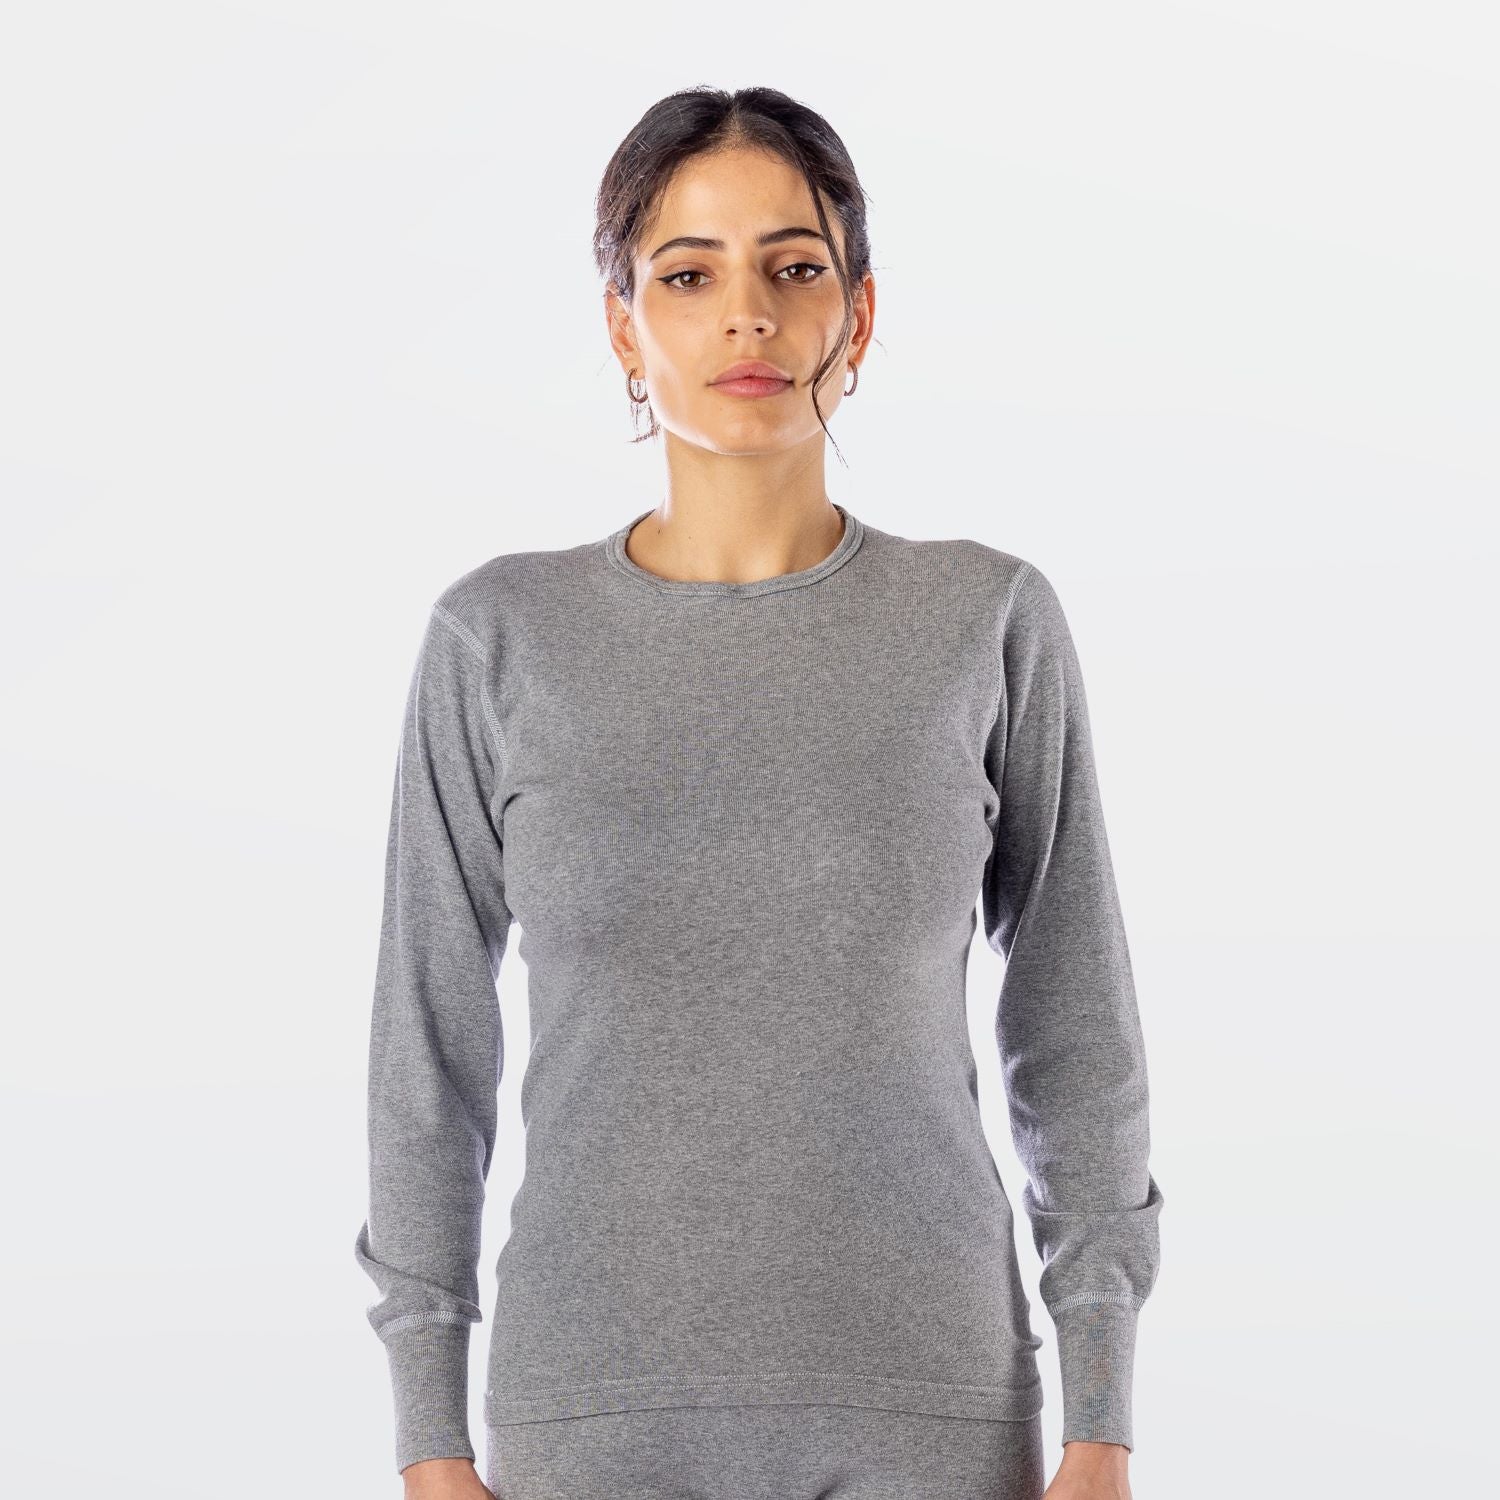 Camiseta interior de algodón acanalado Chill Chasers para mujer